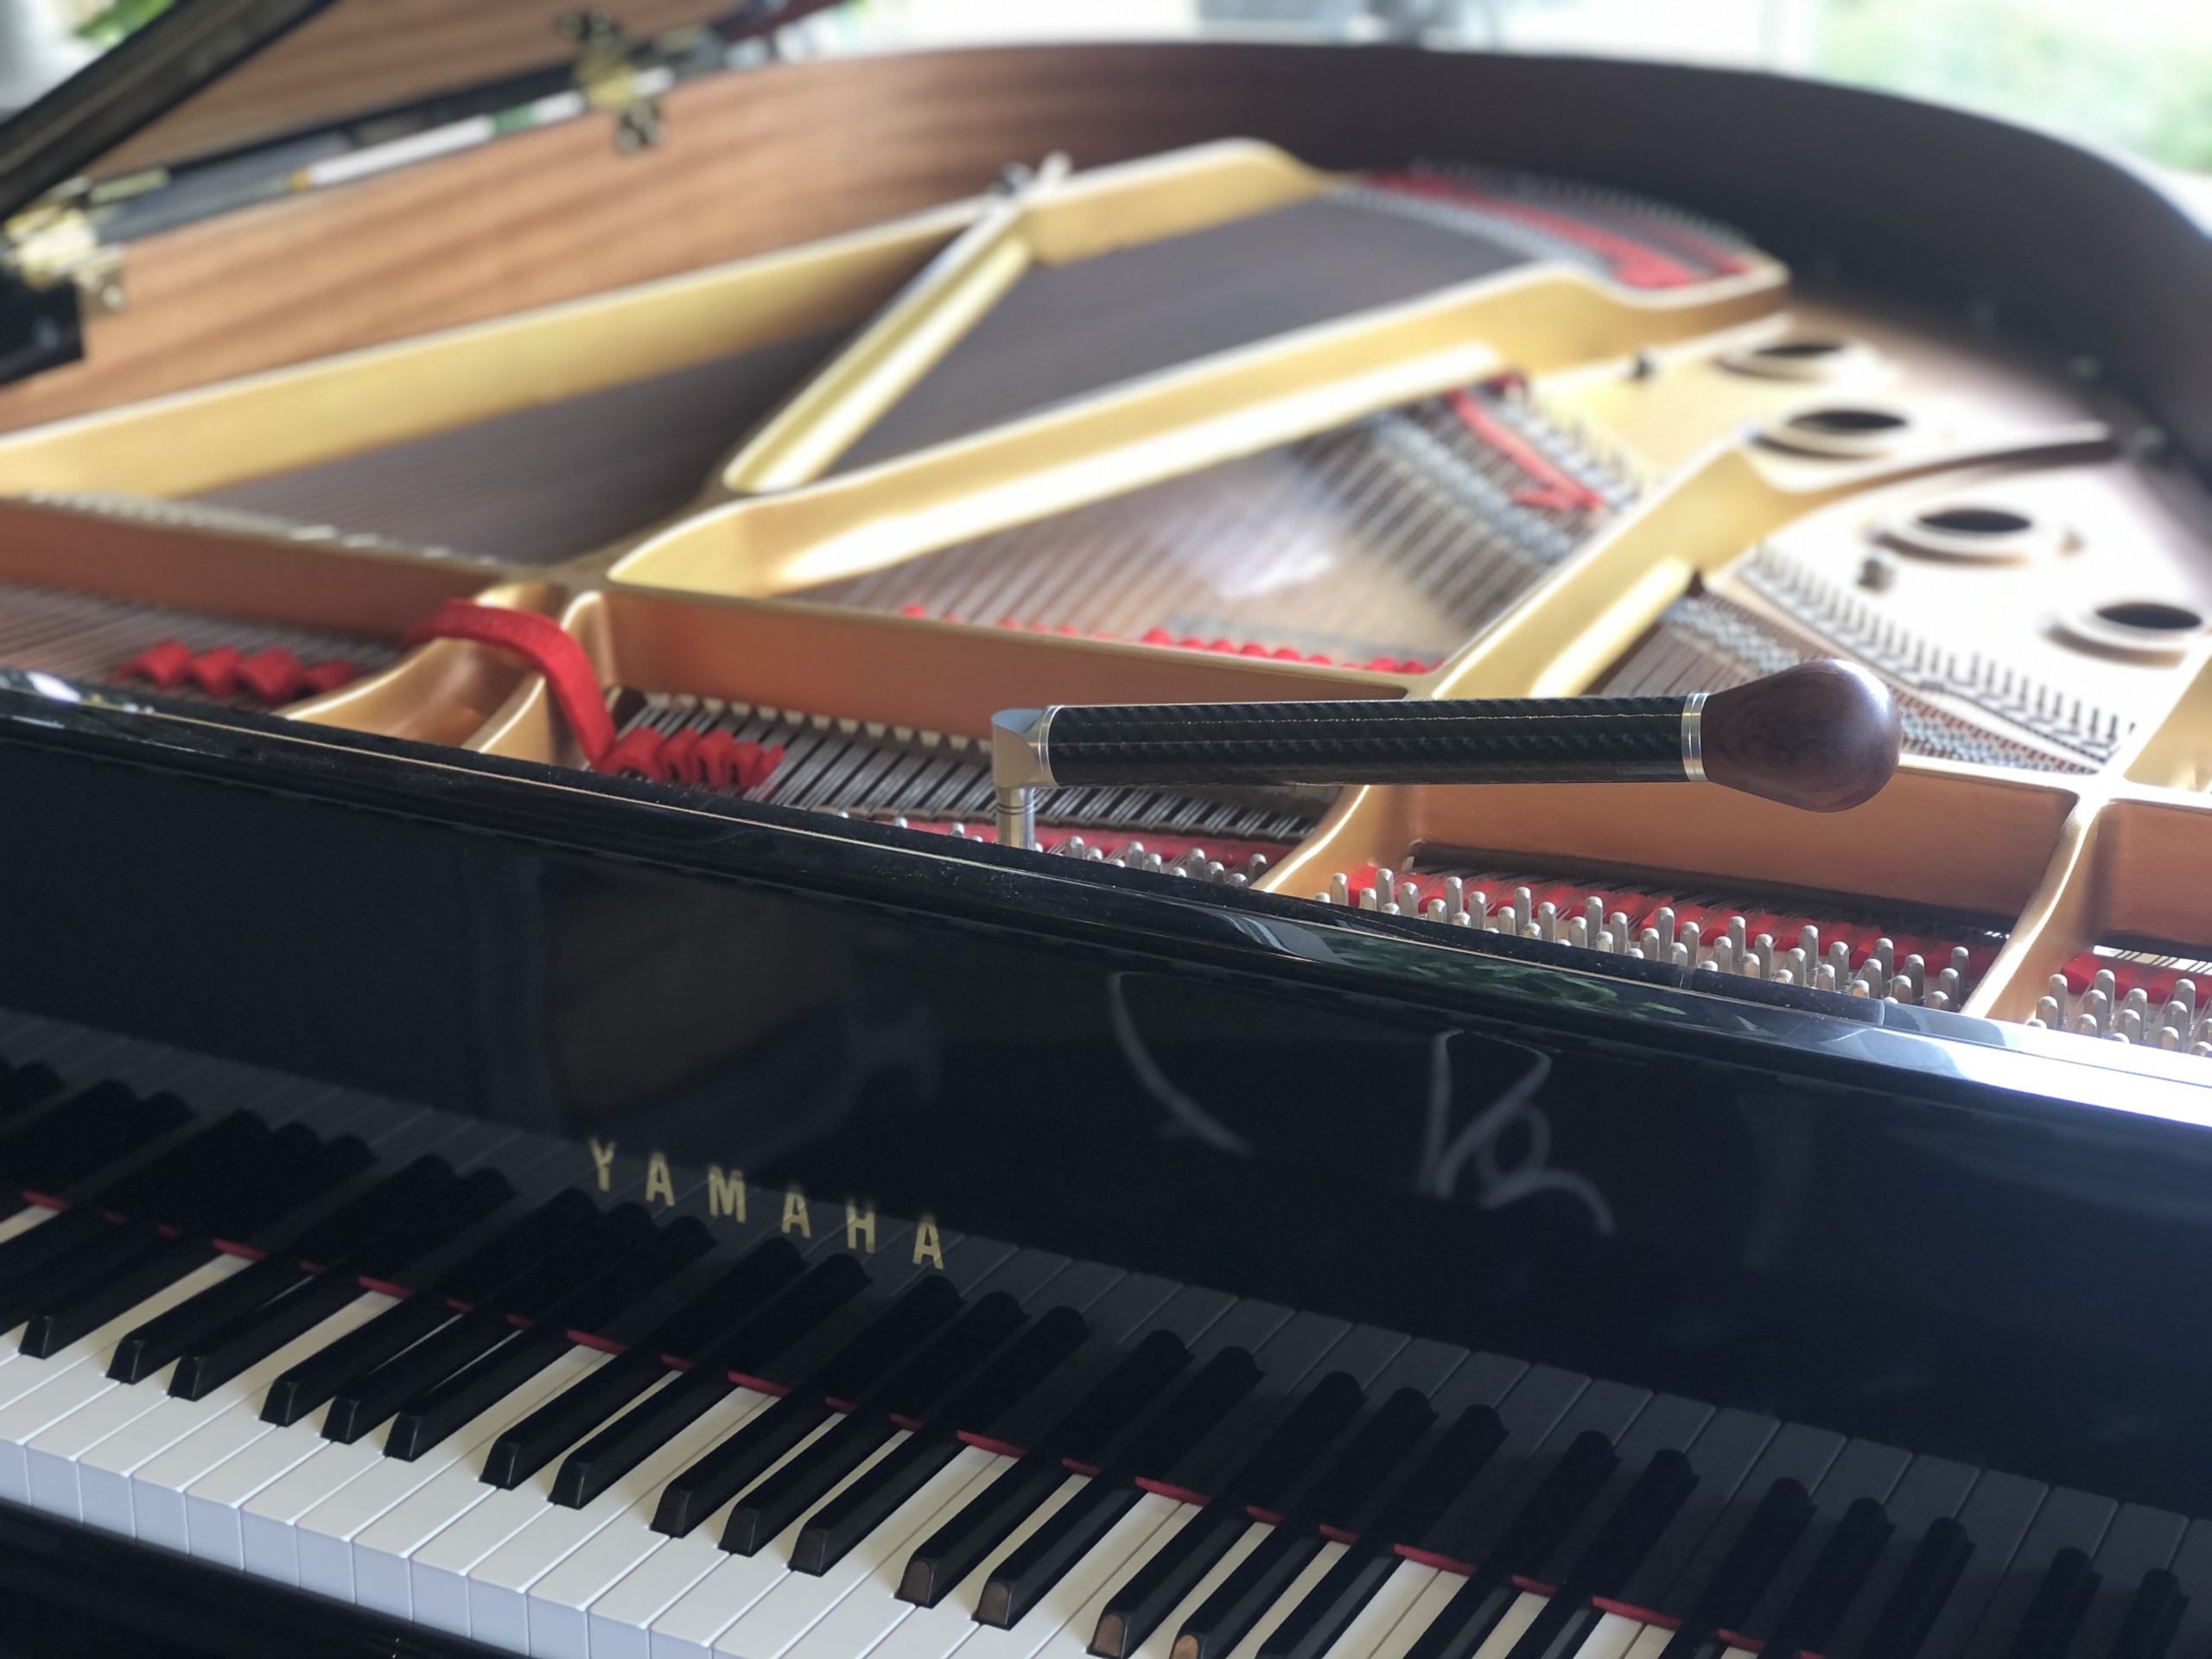 Yamaha grand piano being tuned